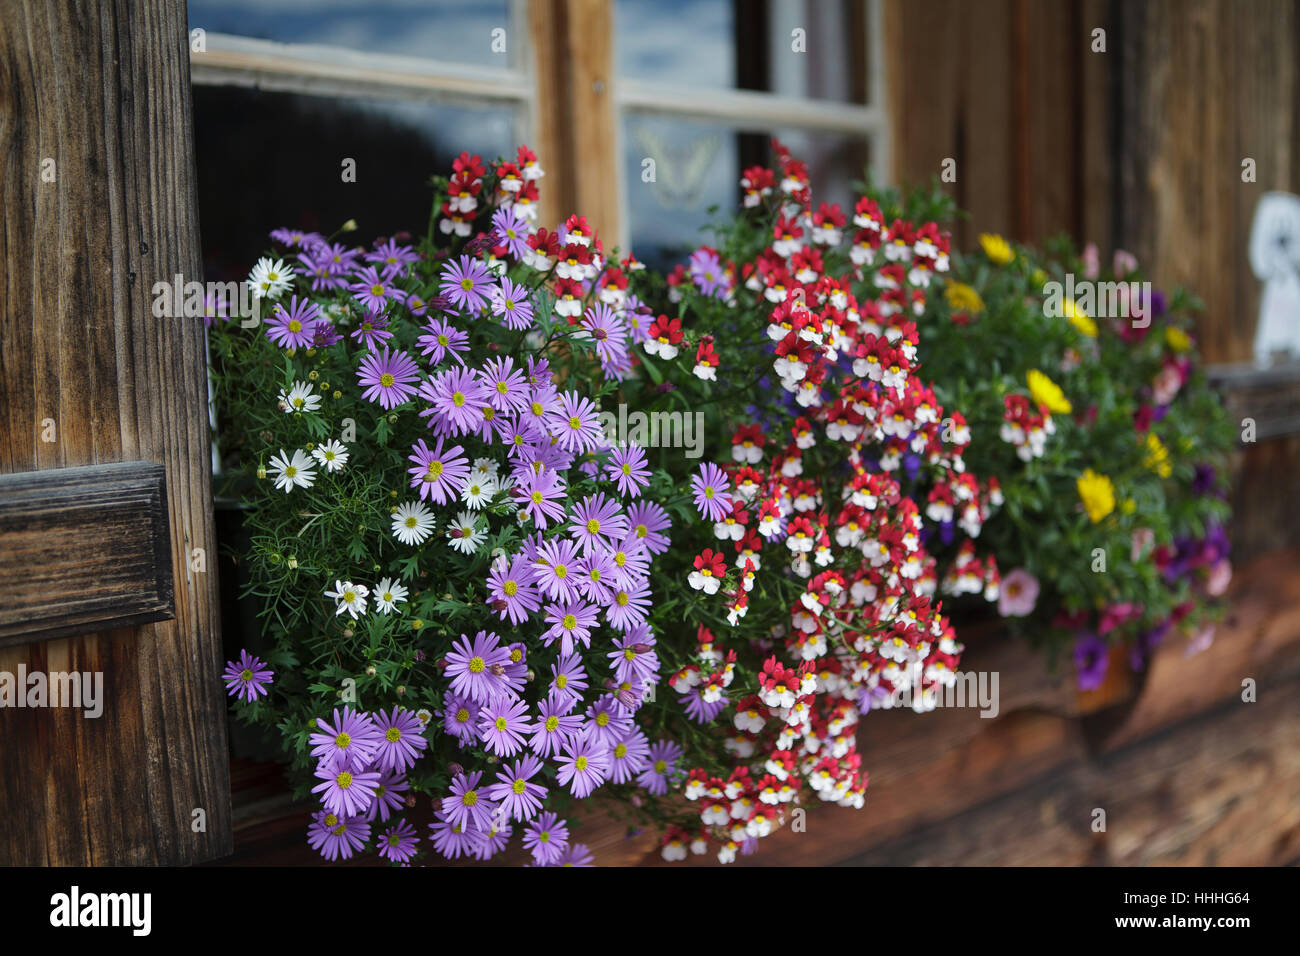 flower arrangement on almhtte Stock Photo